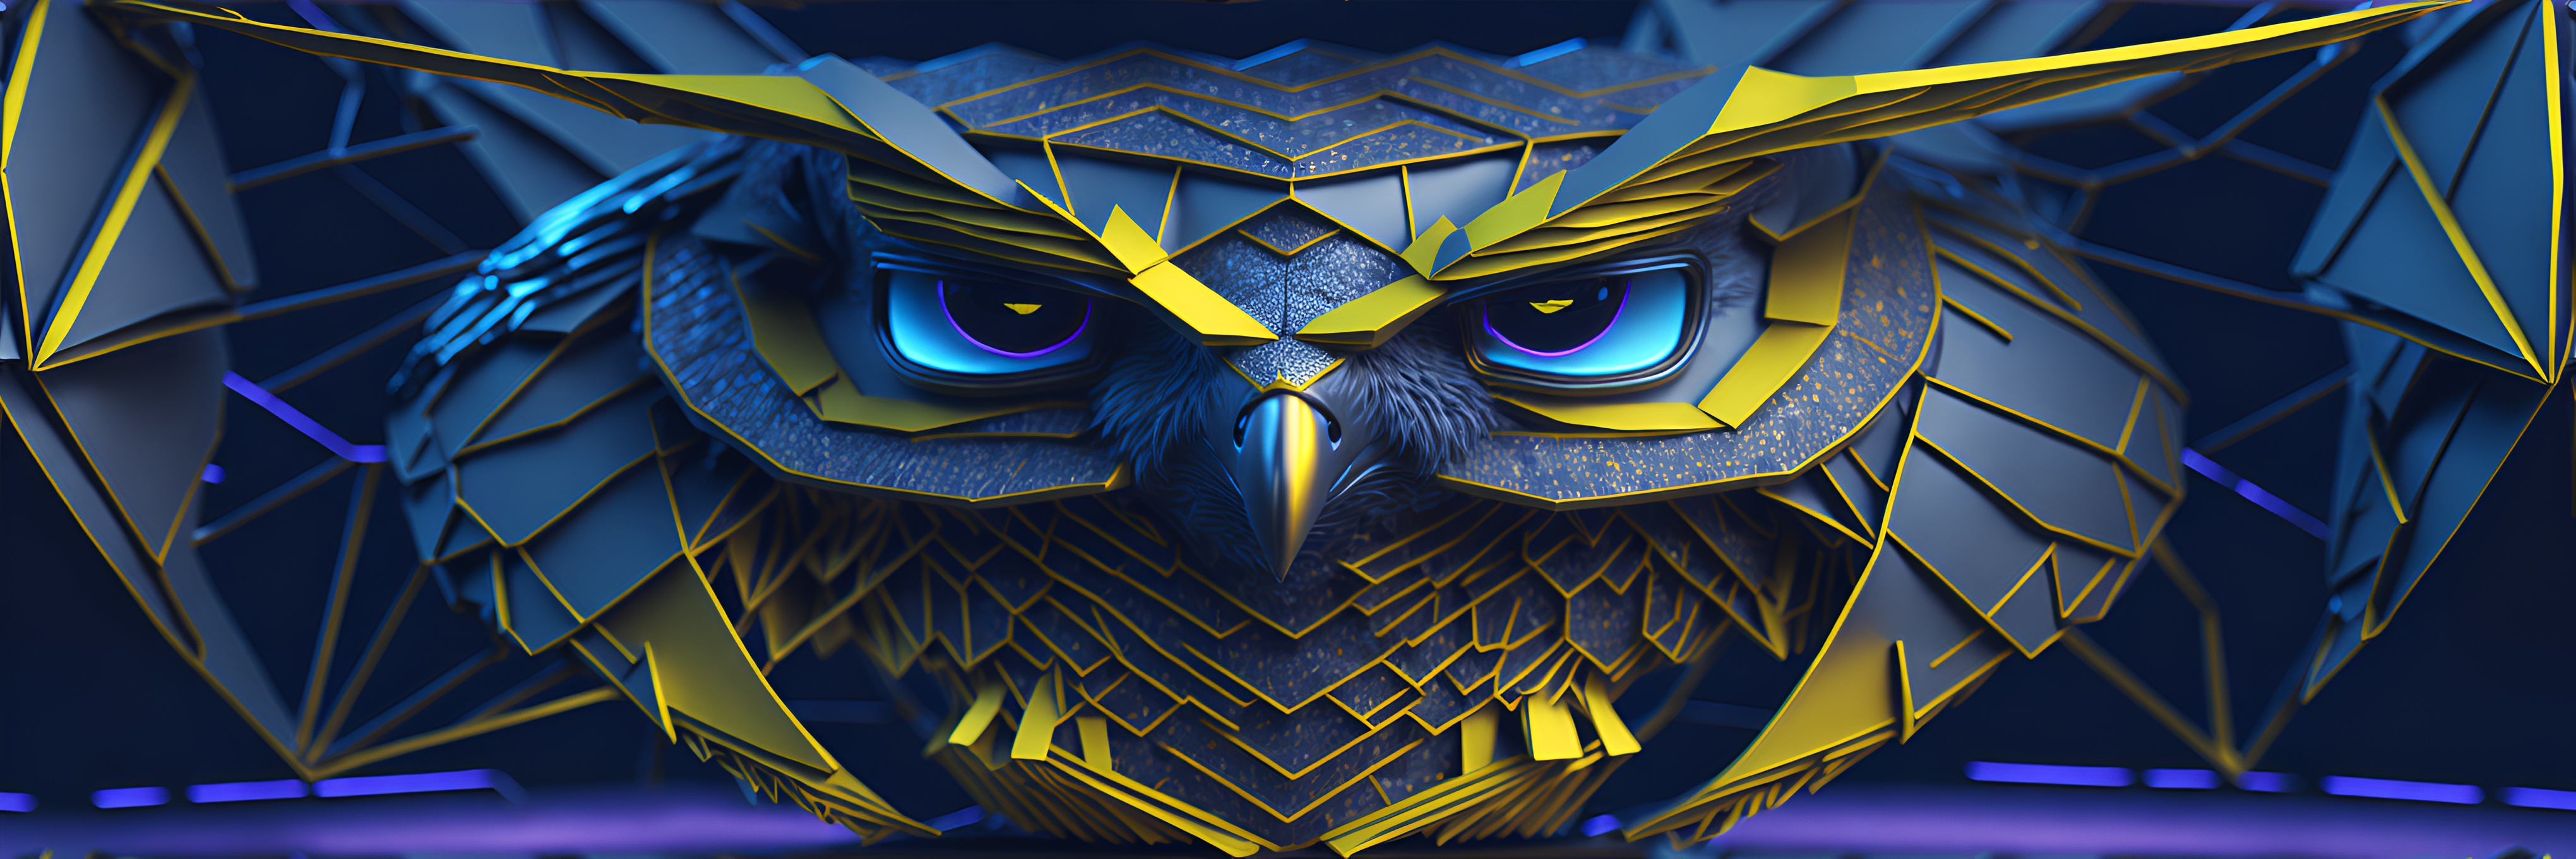 Owl-AI-Art banner